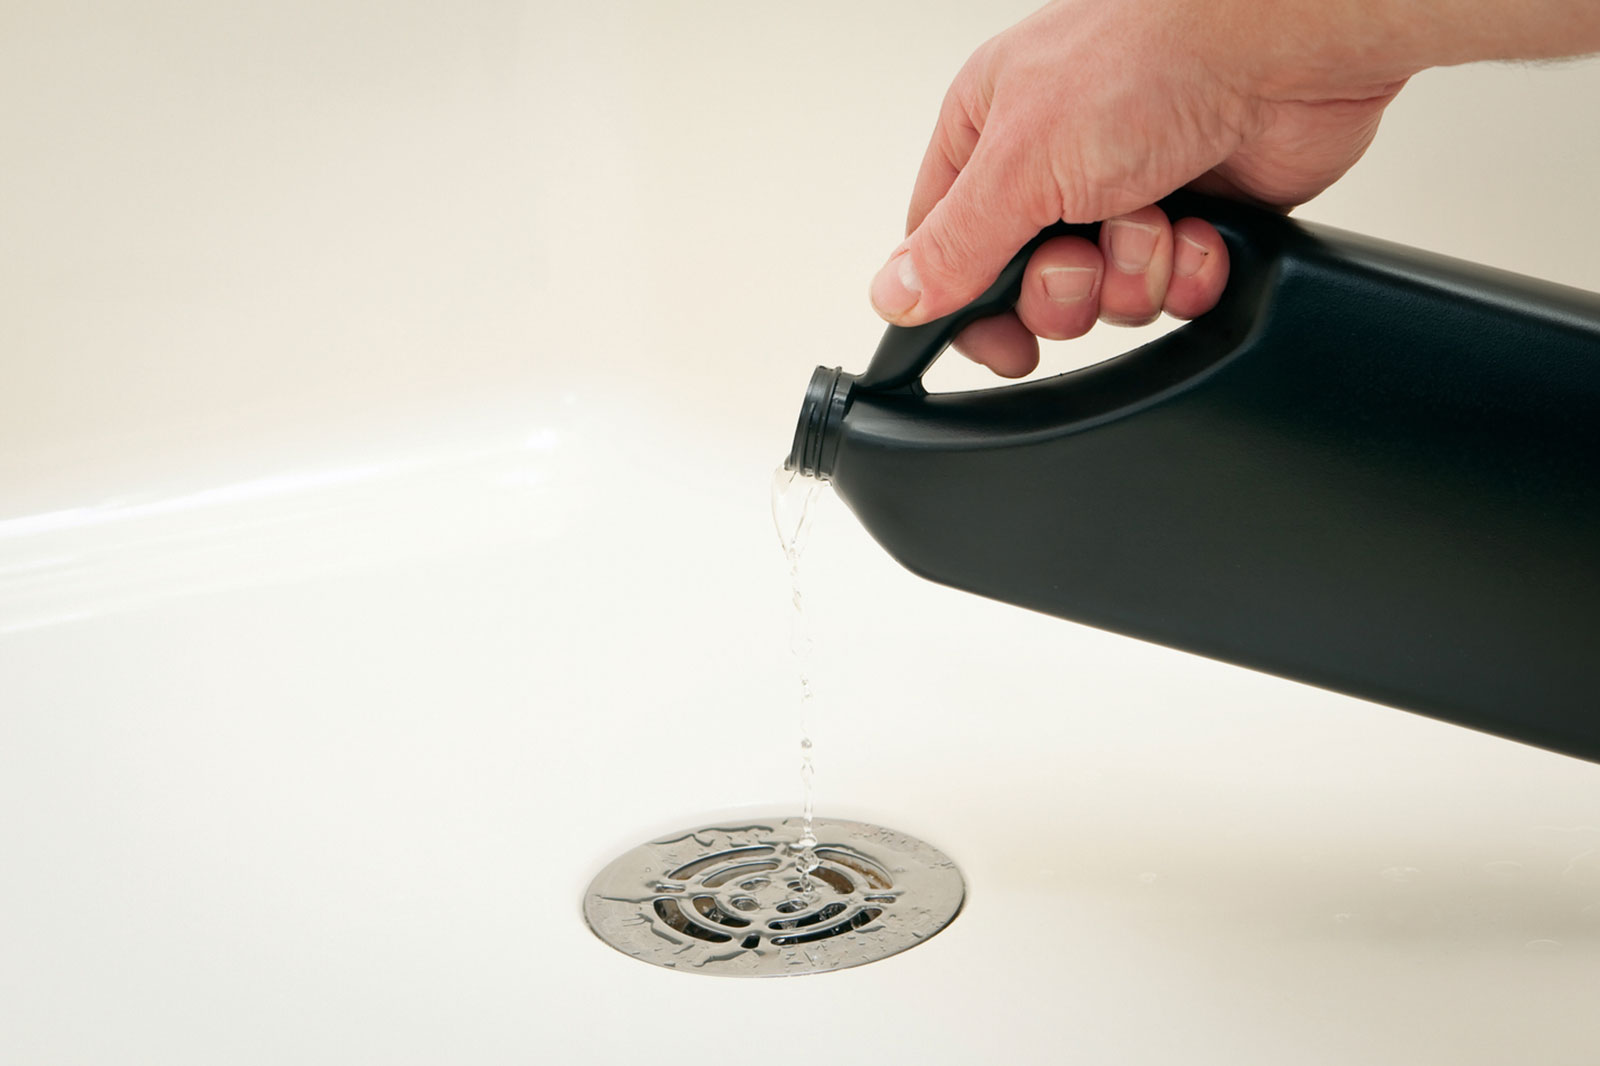 Few Reasons to Avoid Liquid Drain Cleaners